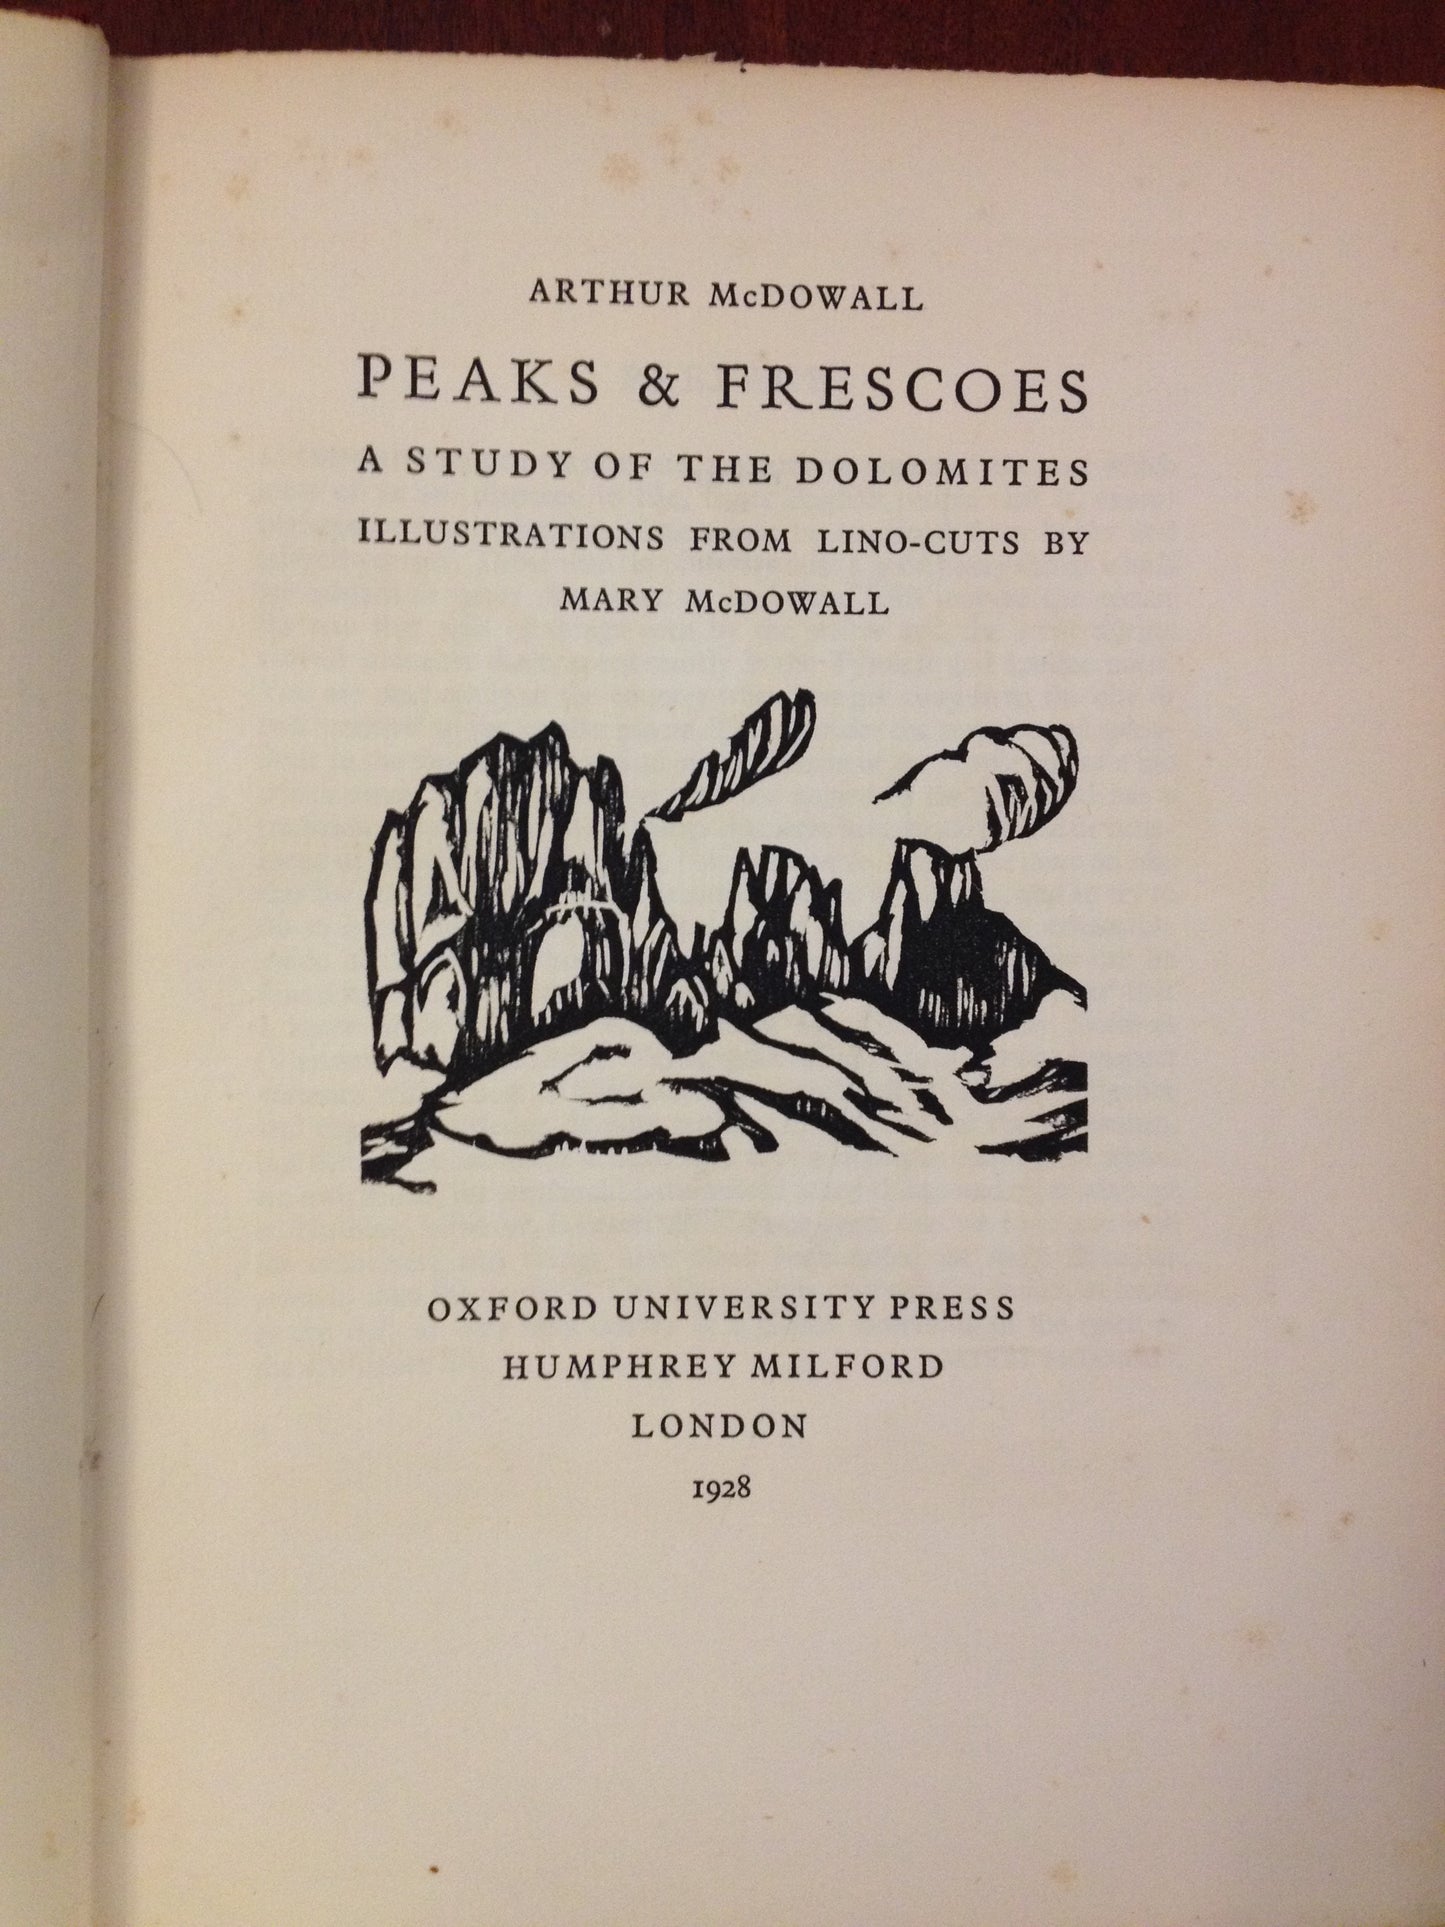 PEAKS & FRESCOES: A STUDY OF THE DOLOMITES - ARTHUS MCDOWELL